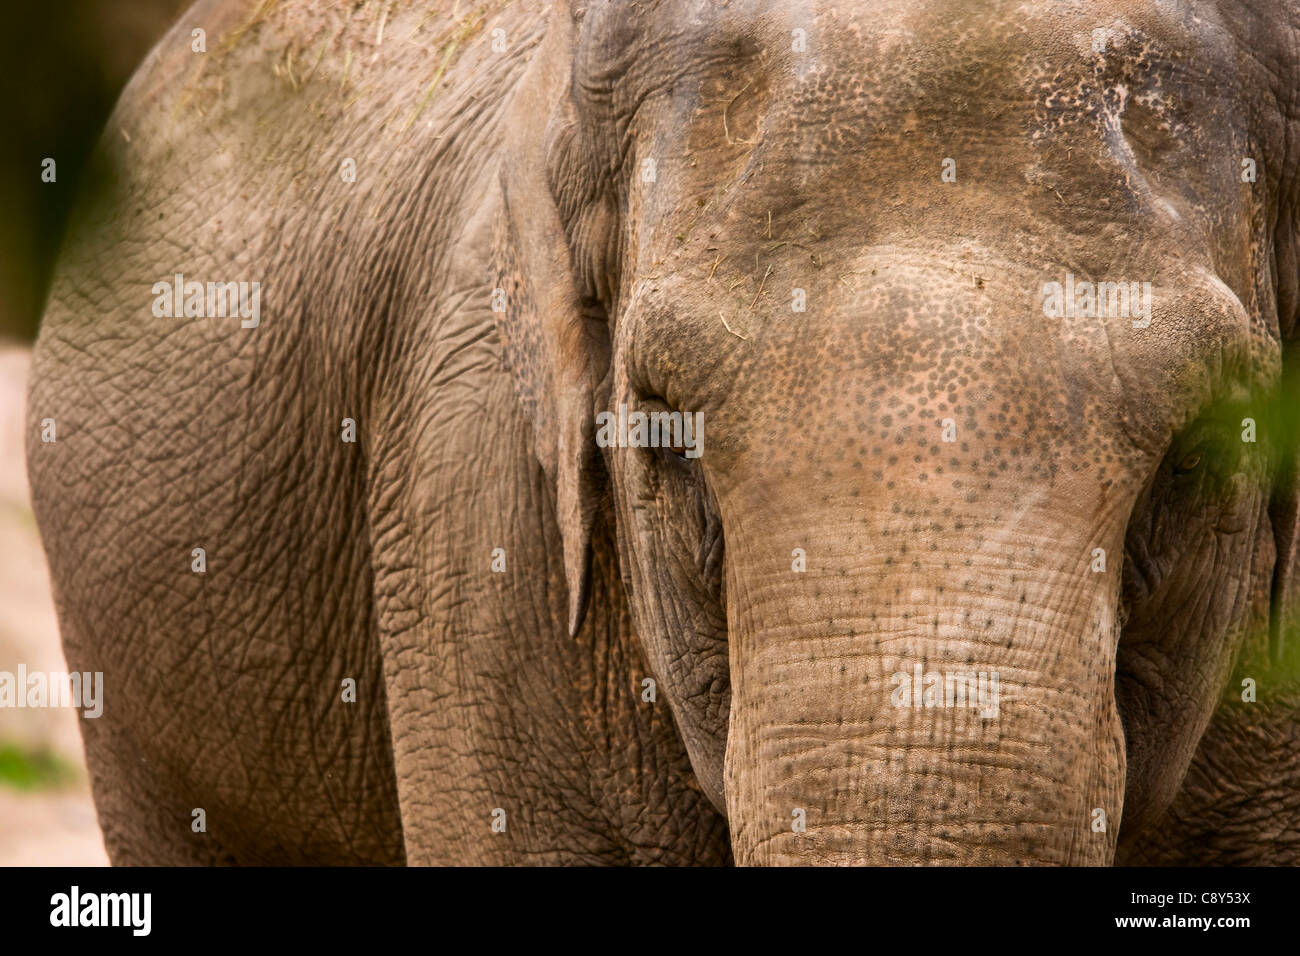 Elefante asiático Foto de stock